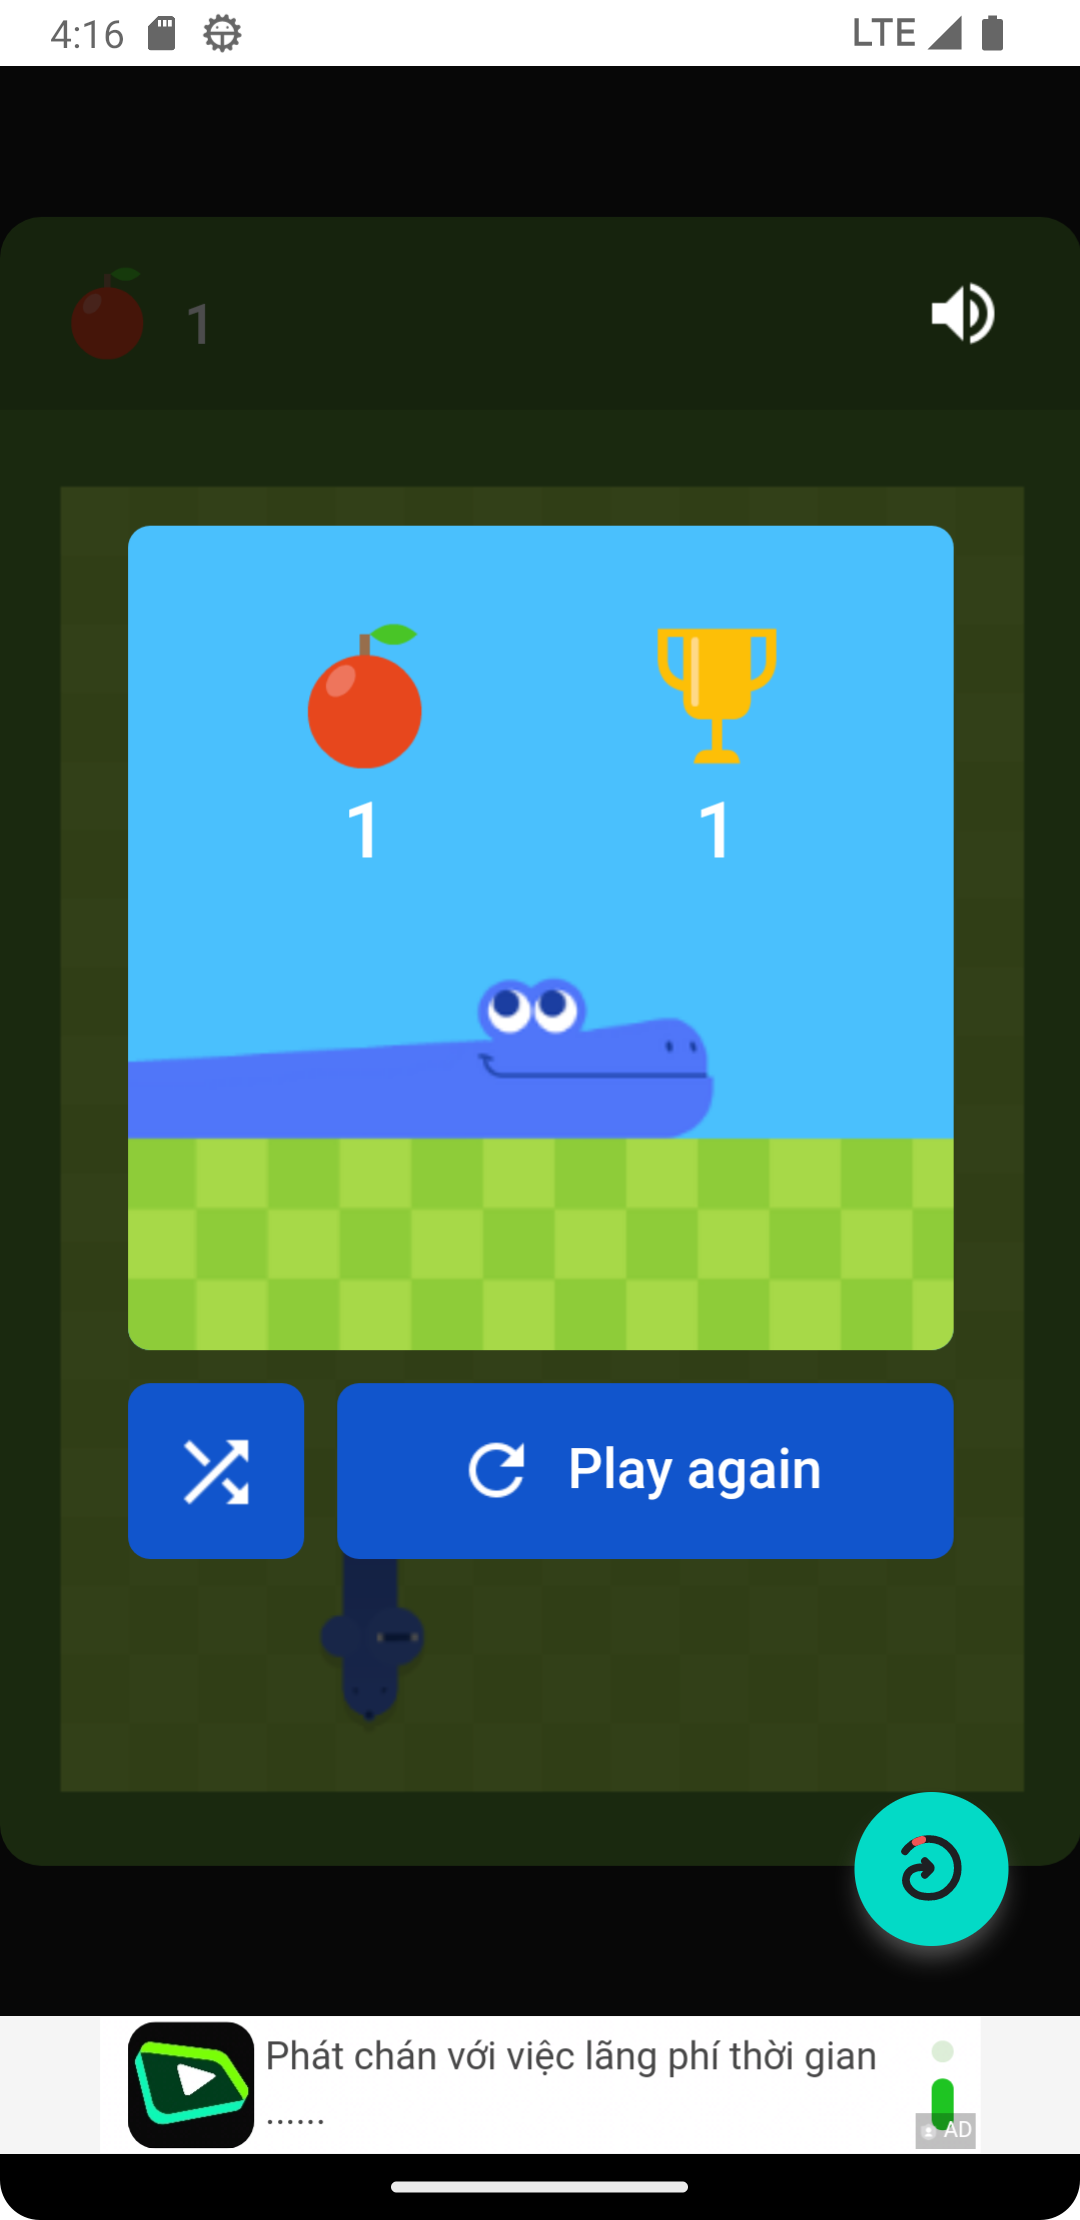 A screenshot of the Snake game